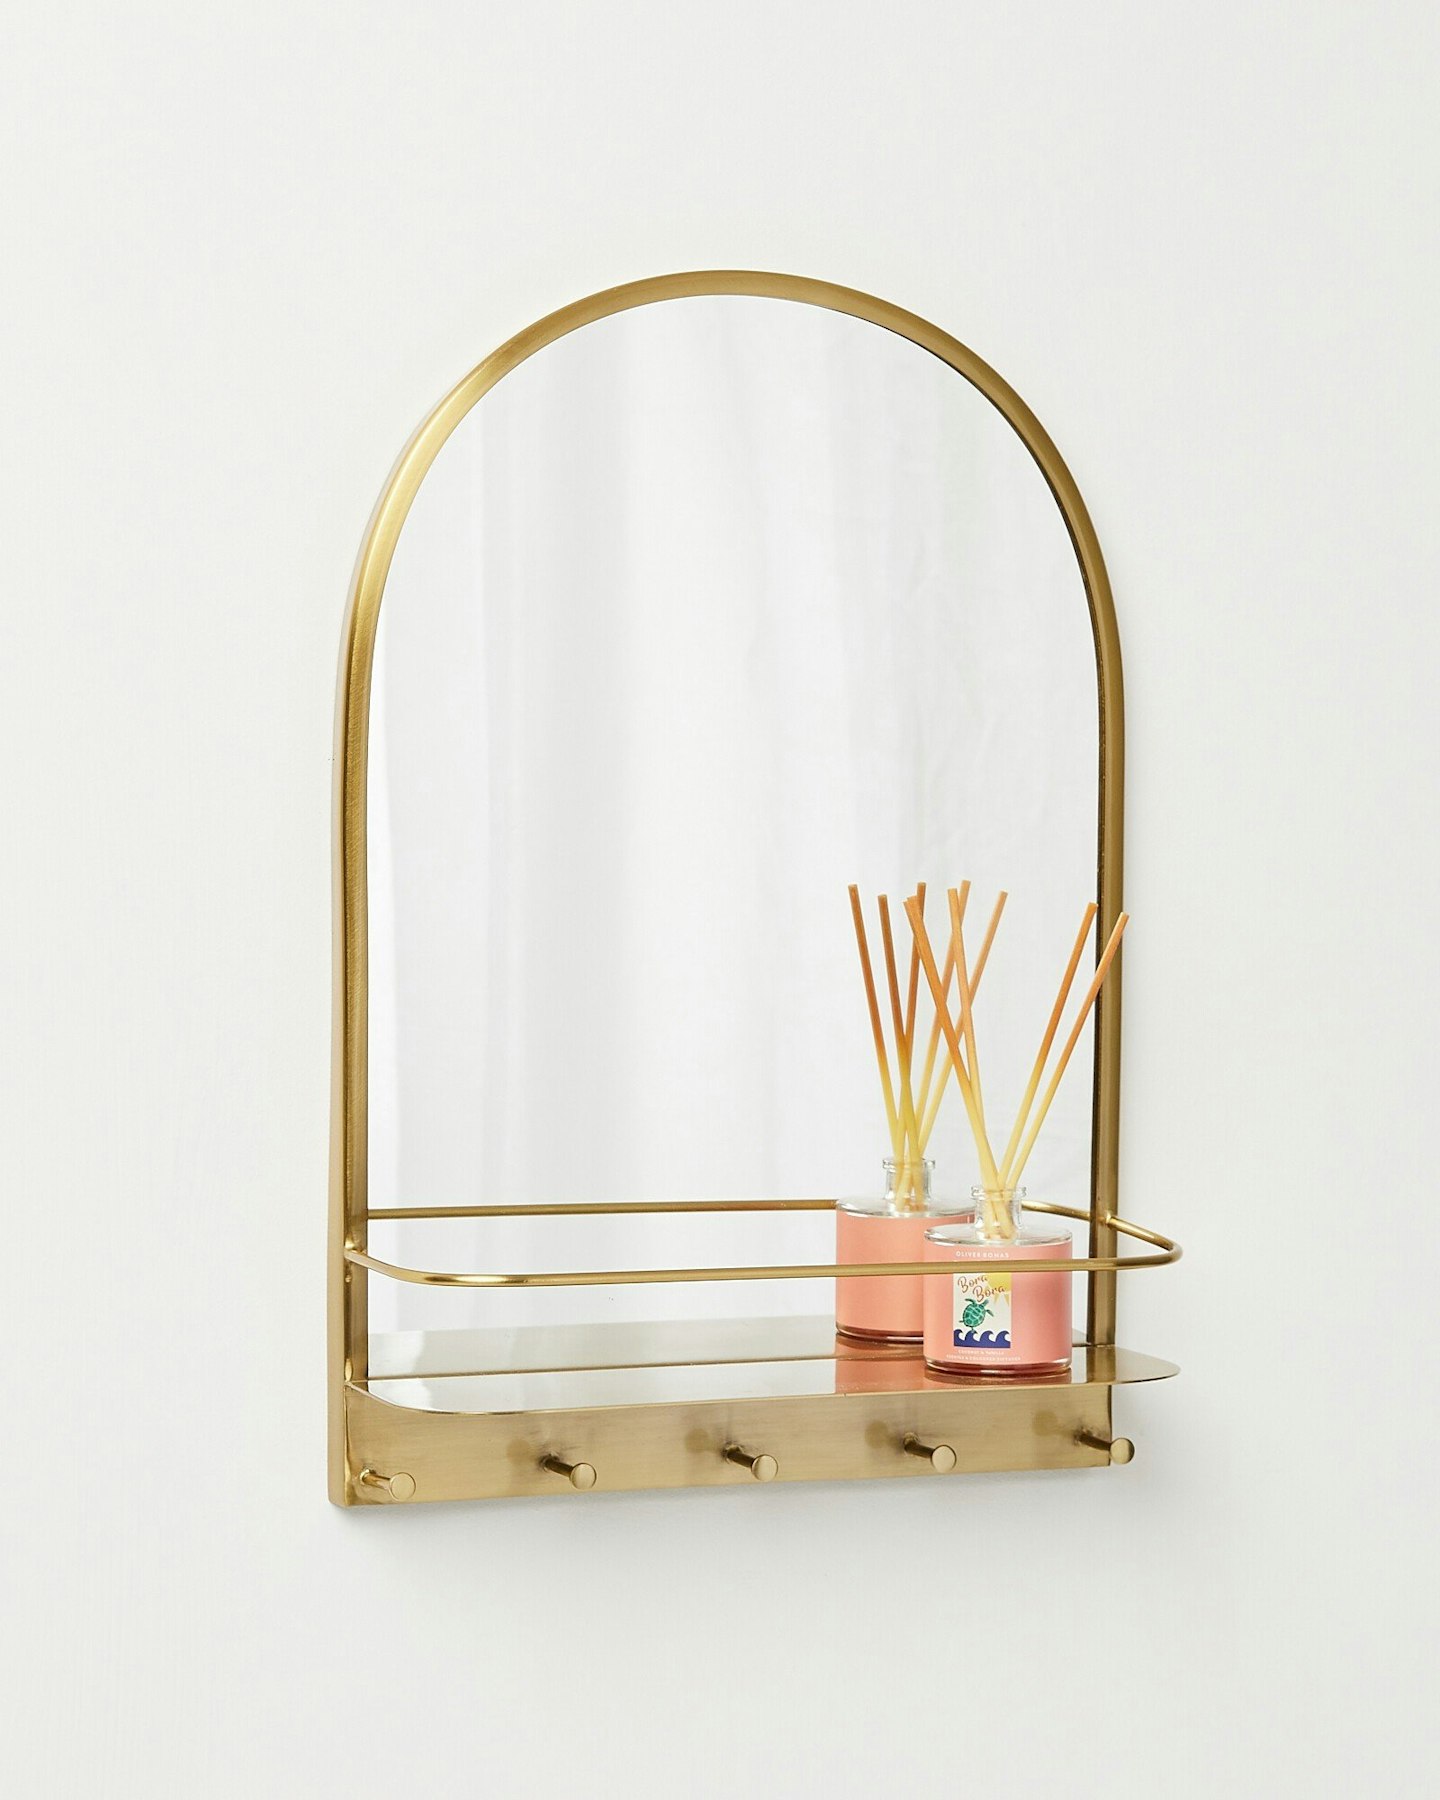 Oliver Bonas, Gold Metal Arch Mirror with Shelf & Hooks, £115